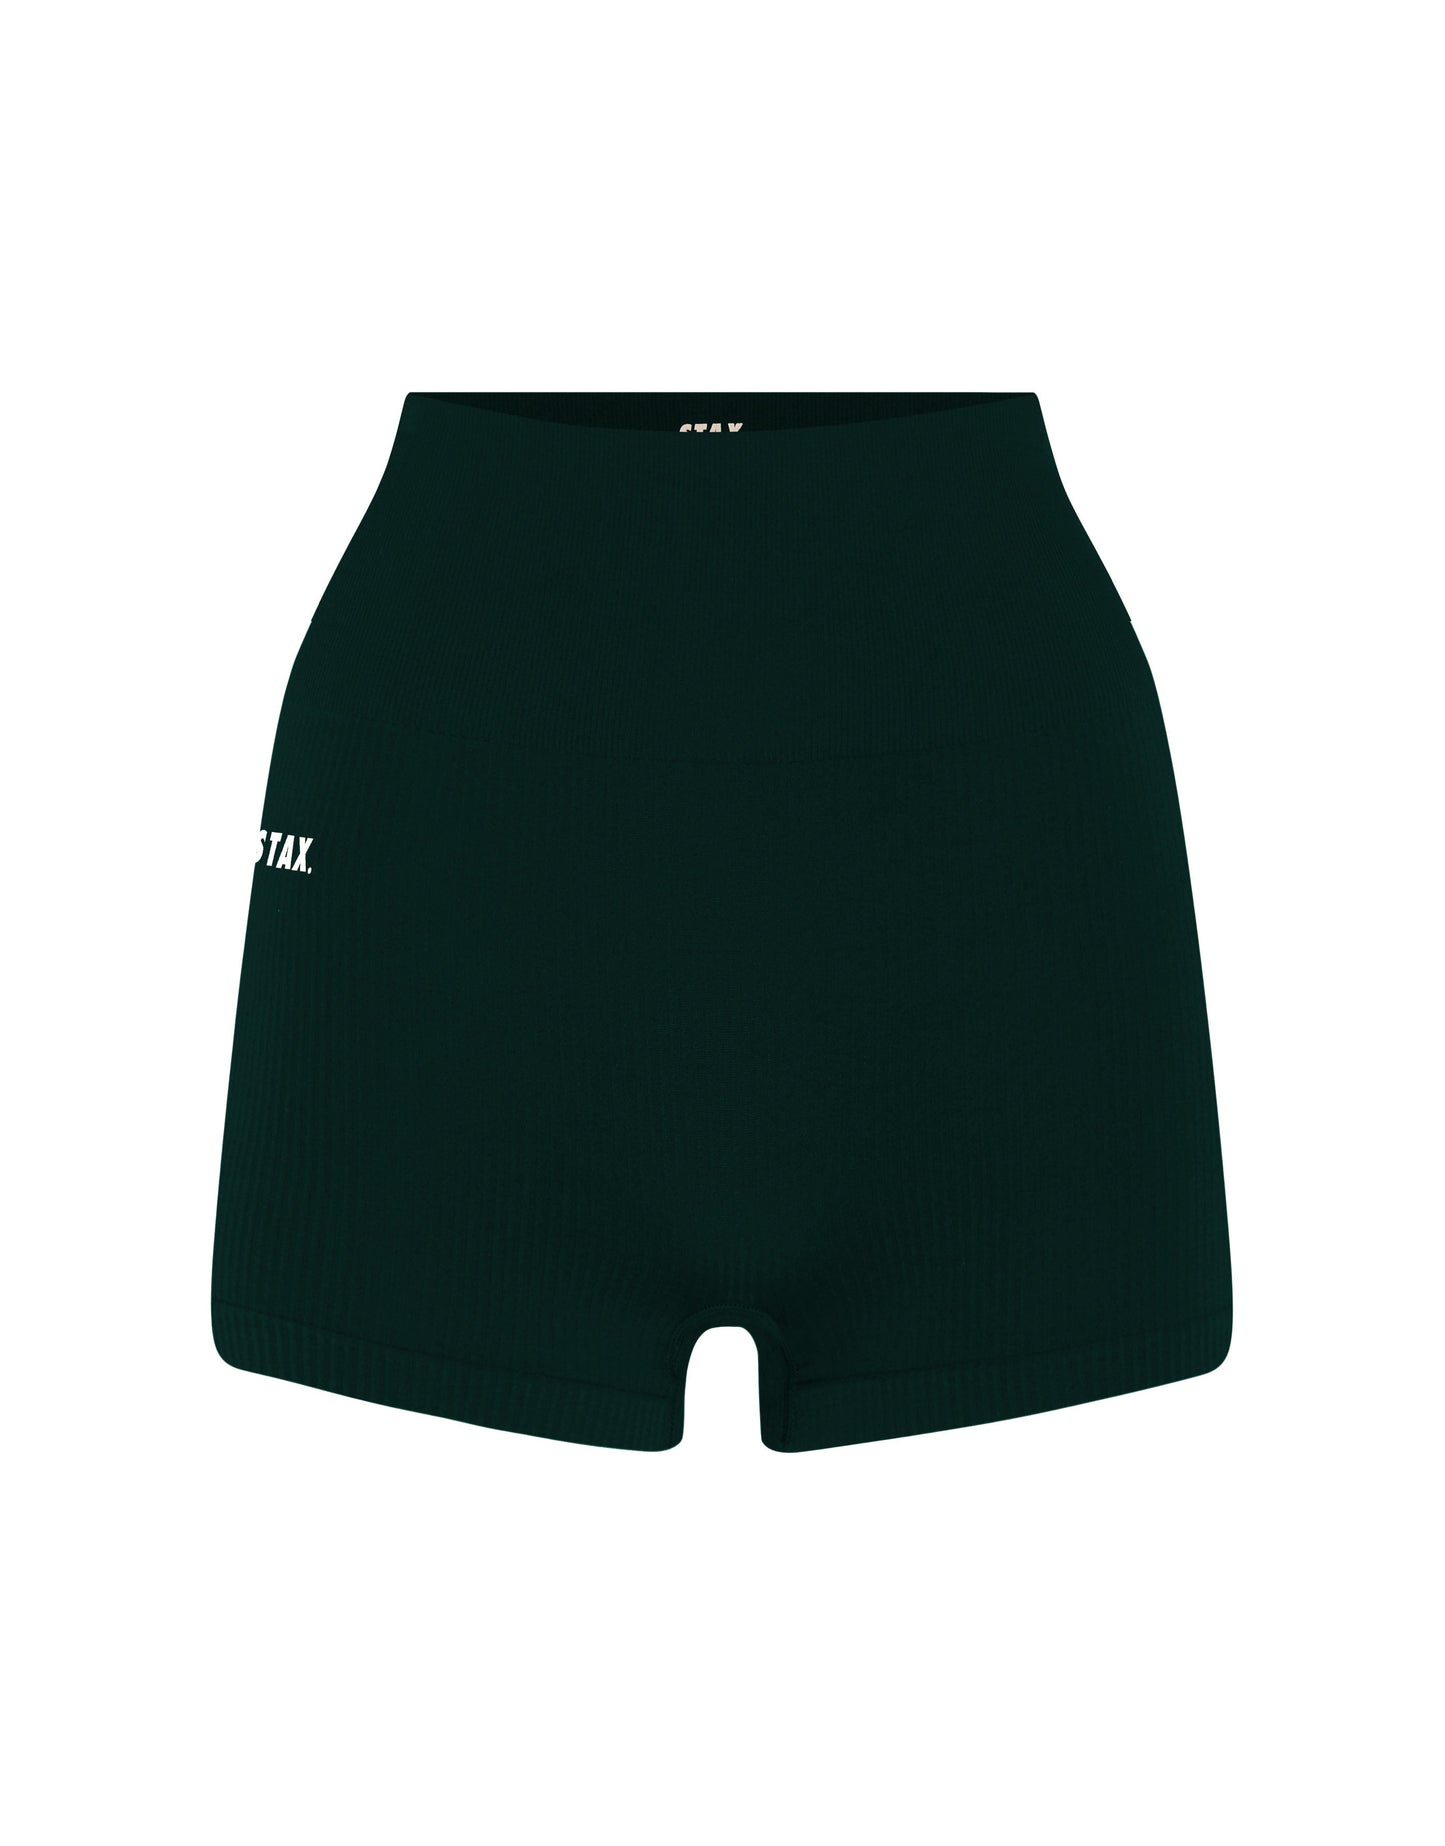 STAX. Premium Seamless V5.1 (Favourites) Mini Lounge Shorts - Cyprus (Green)